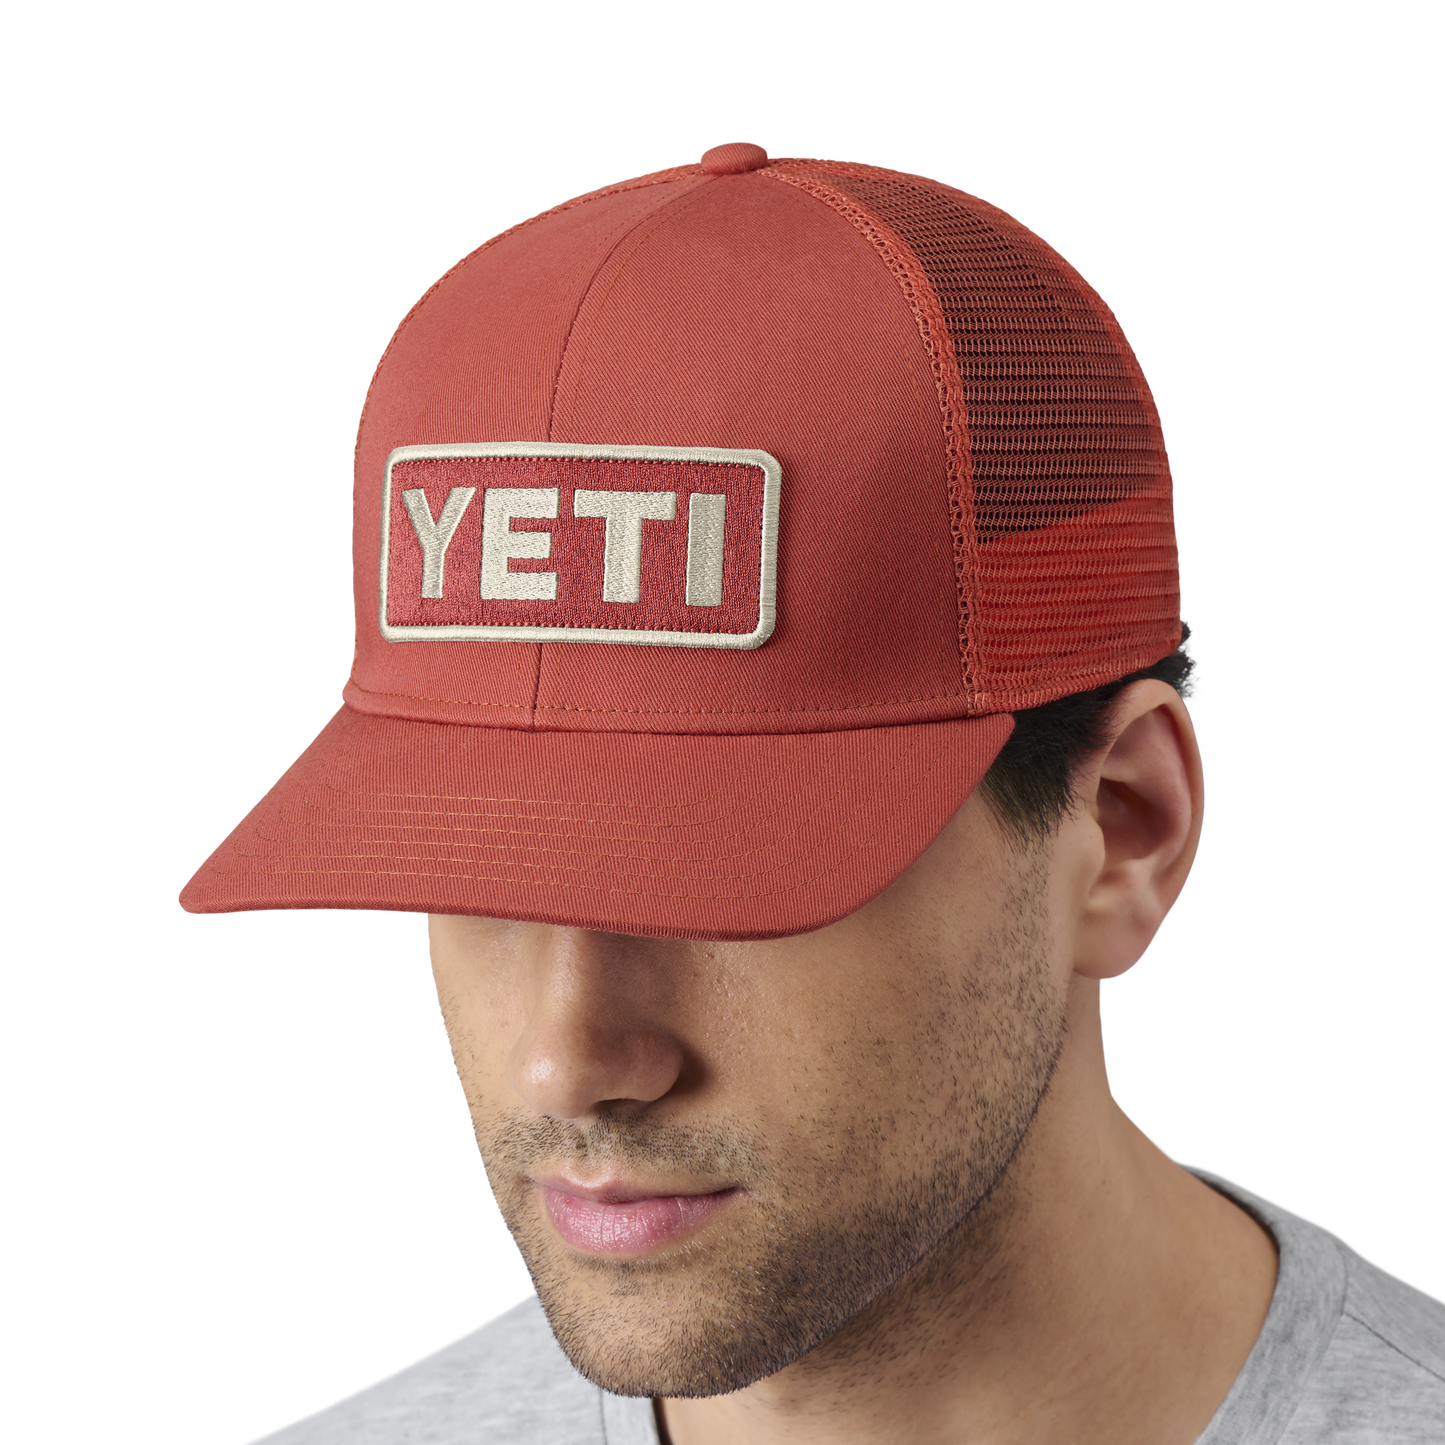 YETI F22-truckerspet met logo-badge Rust